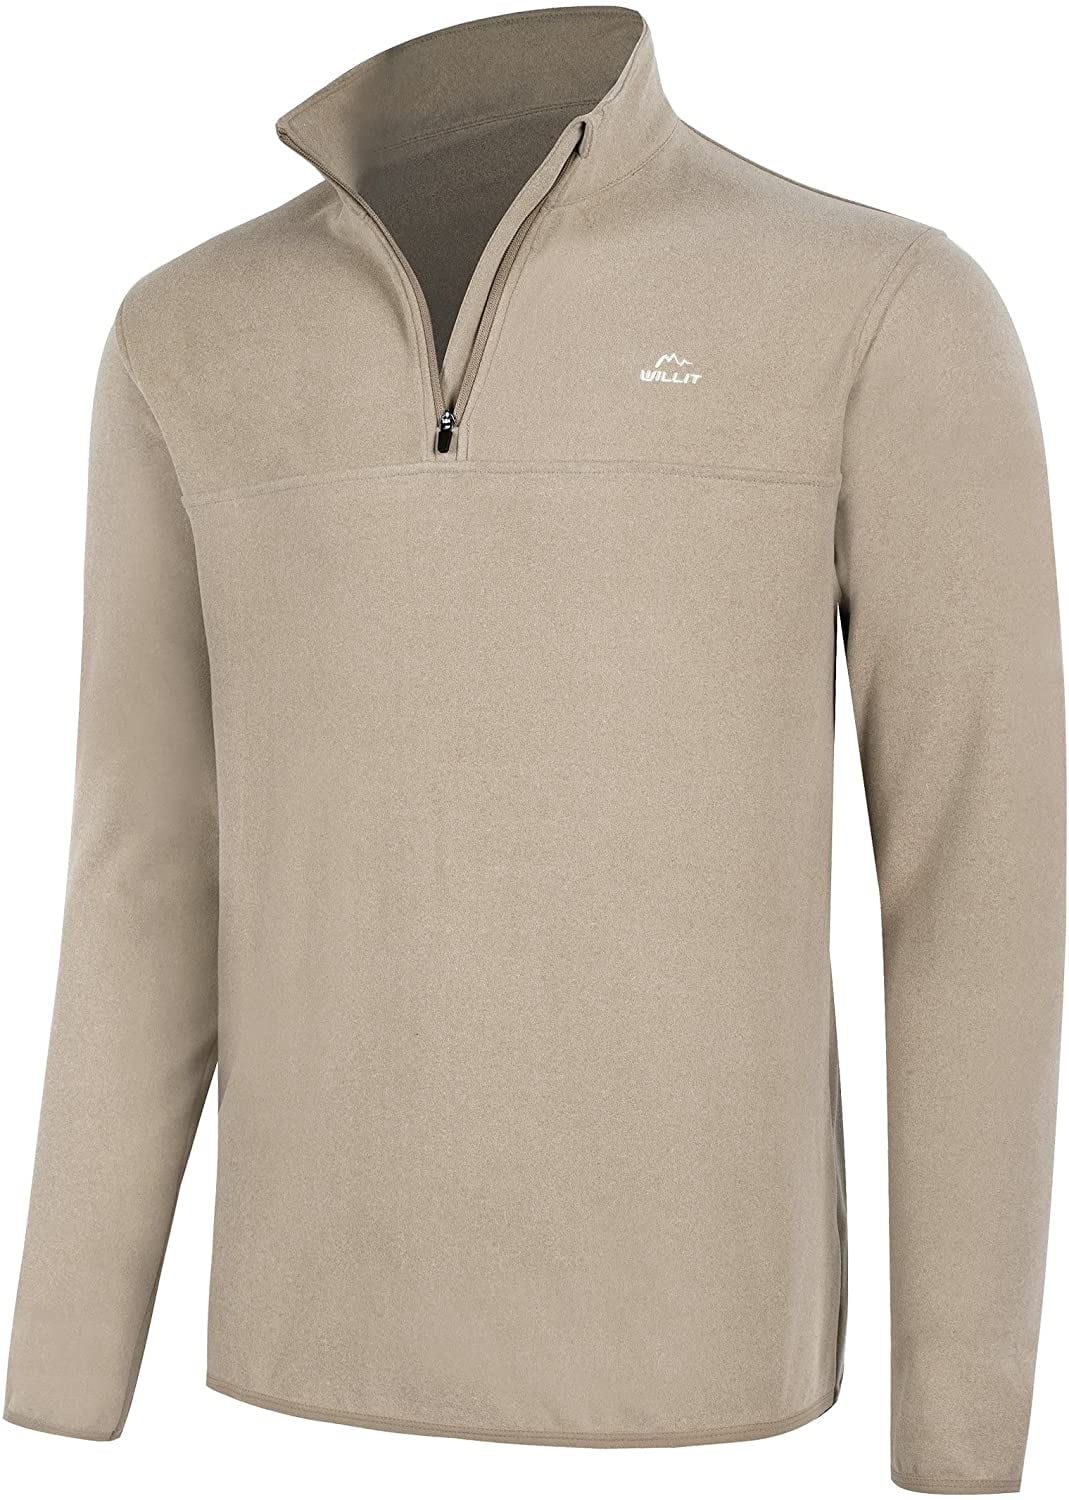 Willit Men's Fleece Pullover Quarter Zip Sweaters Cold Weather Thermal Shirt Jacket Lightweight 